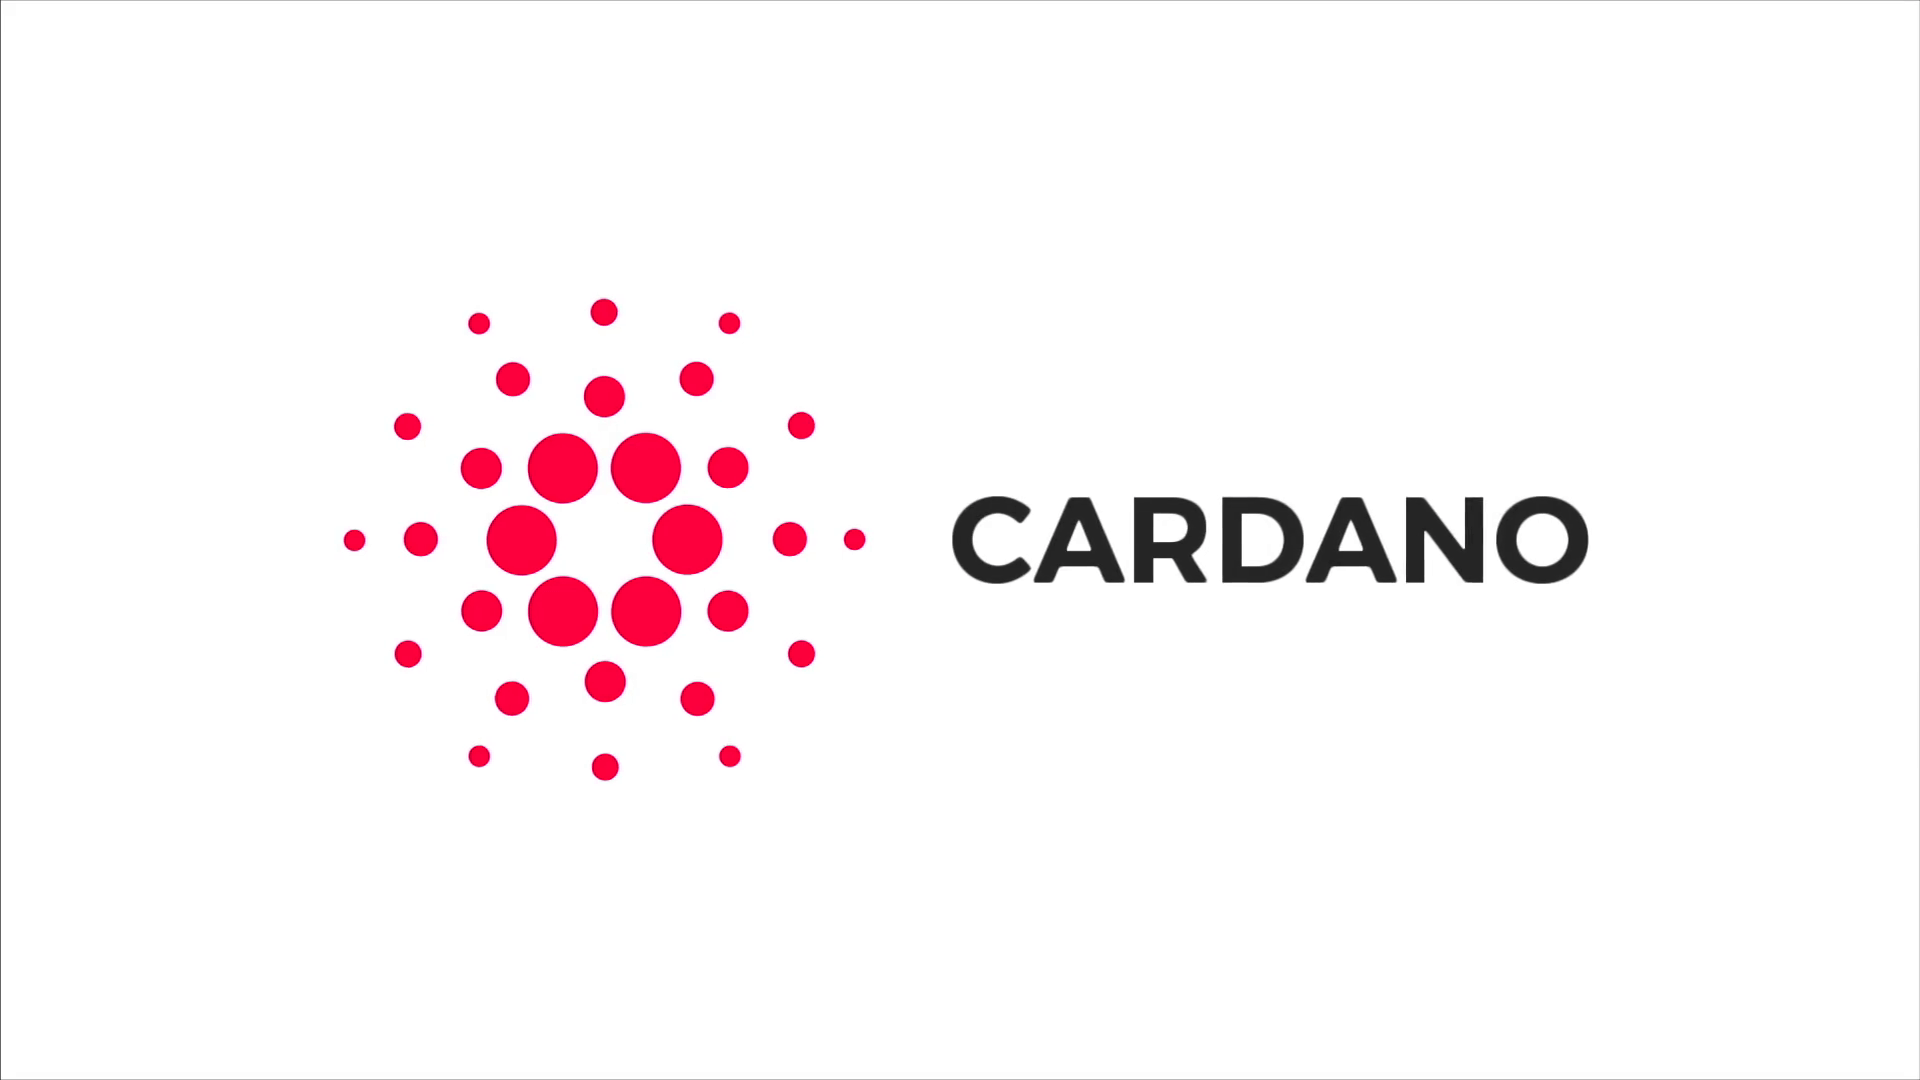 Cardano (ADA) Price Prediction 2021 - Time To Deliver